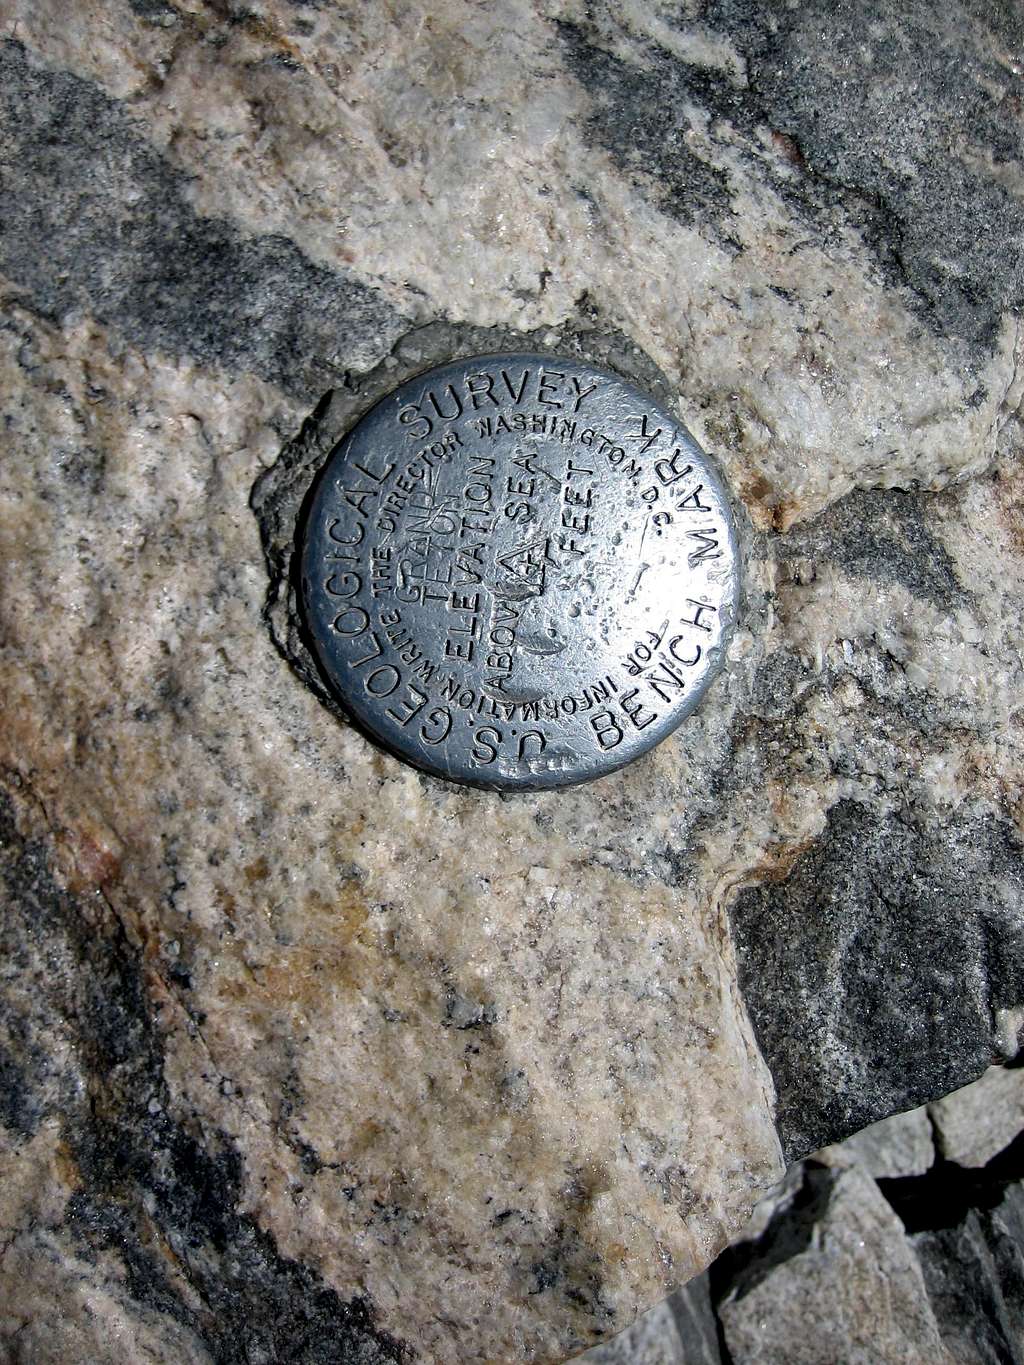 Teton USGS marker